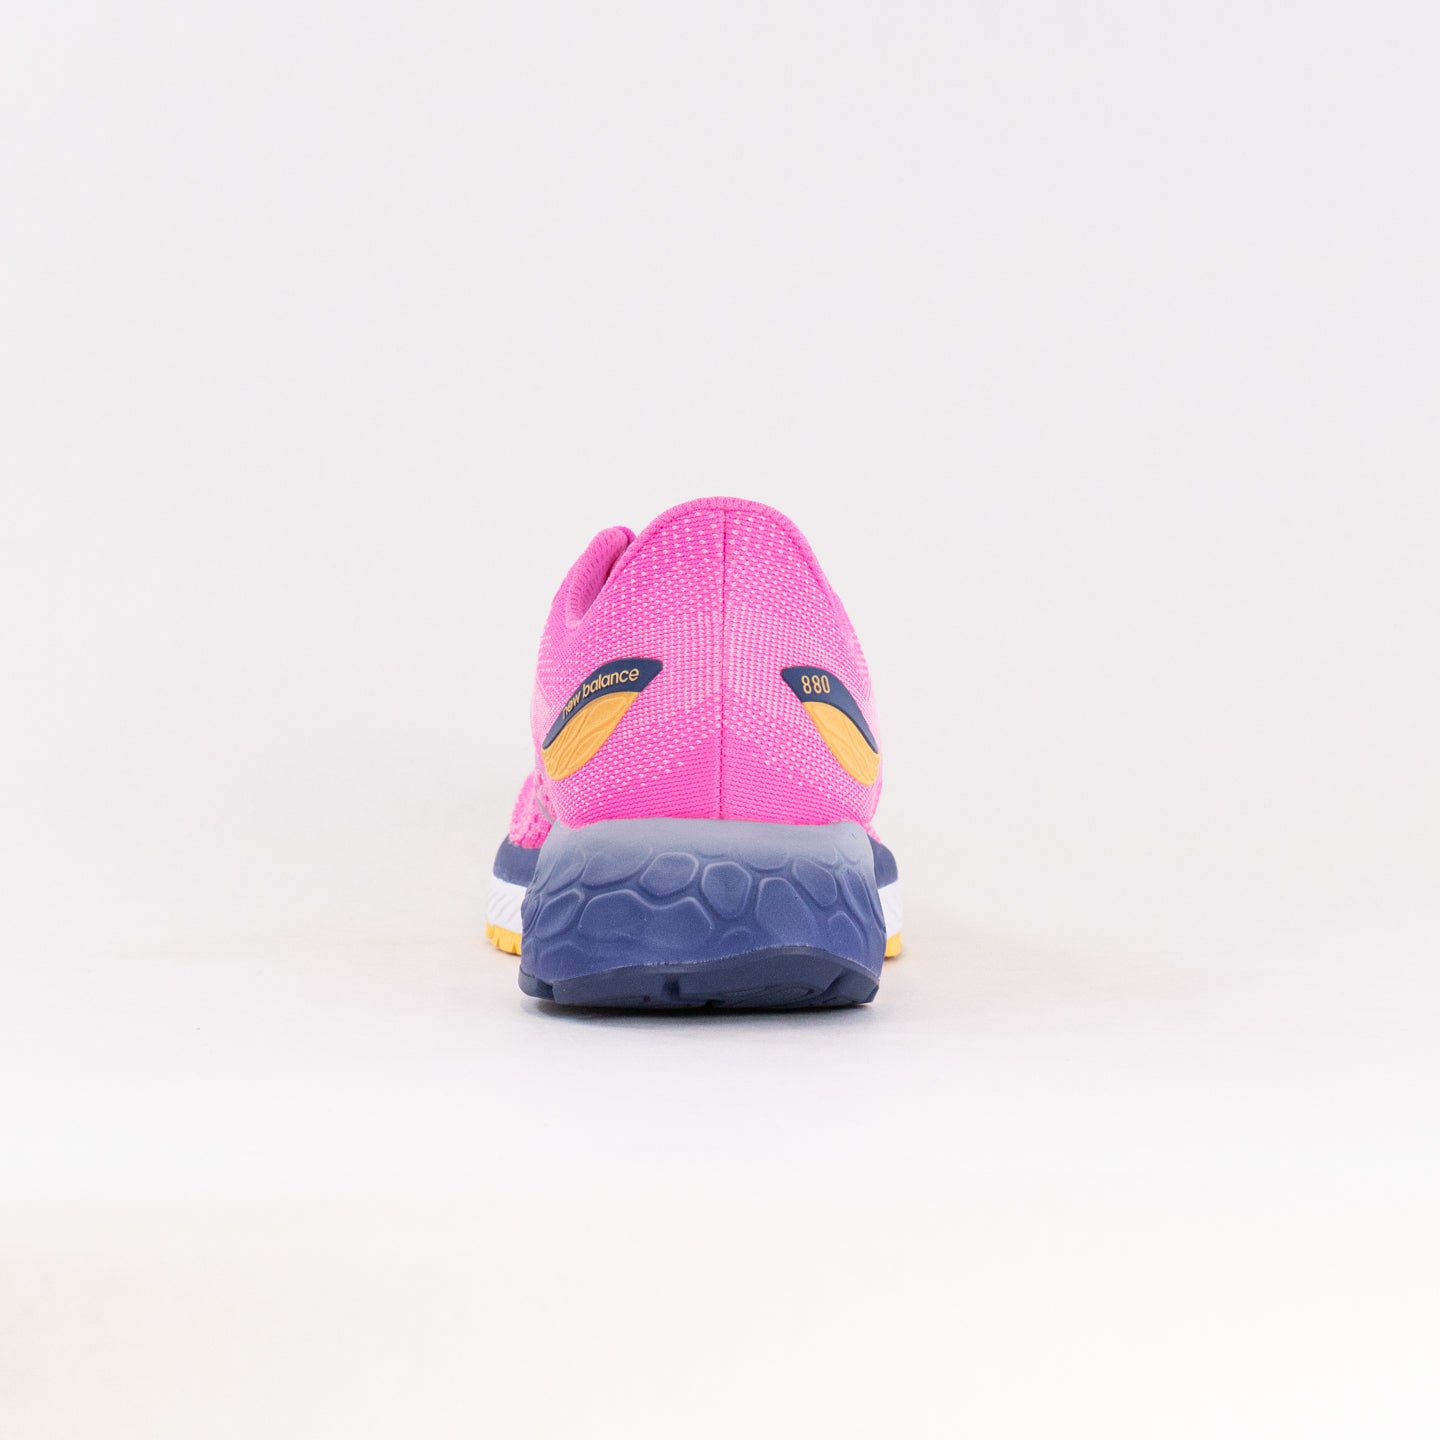 New Balance 880V12 (Women's) - Pink/Yellow/Blue